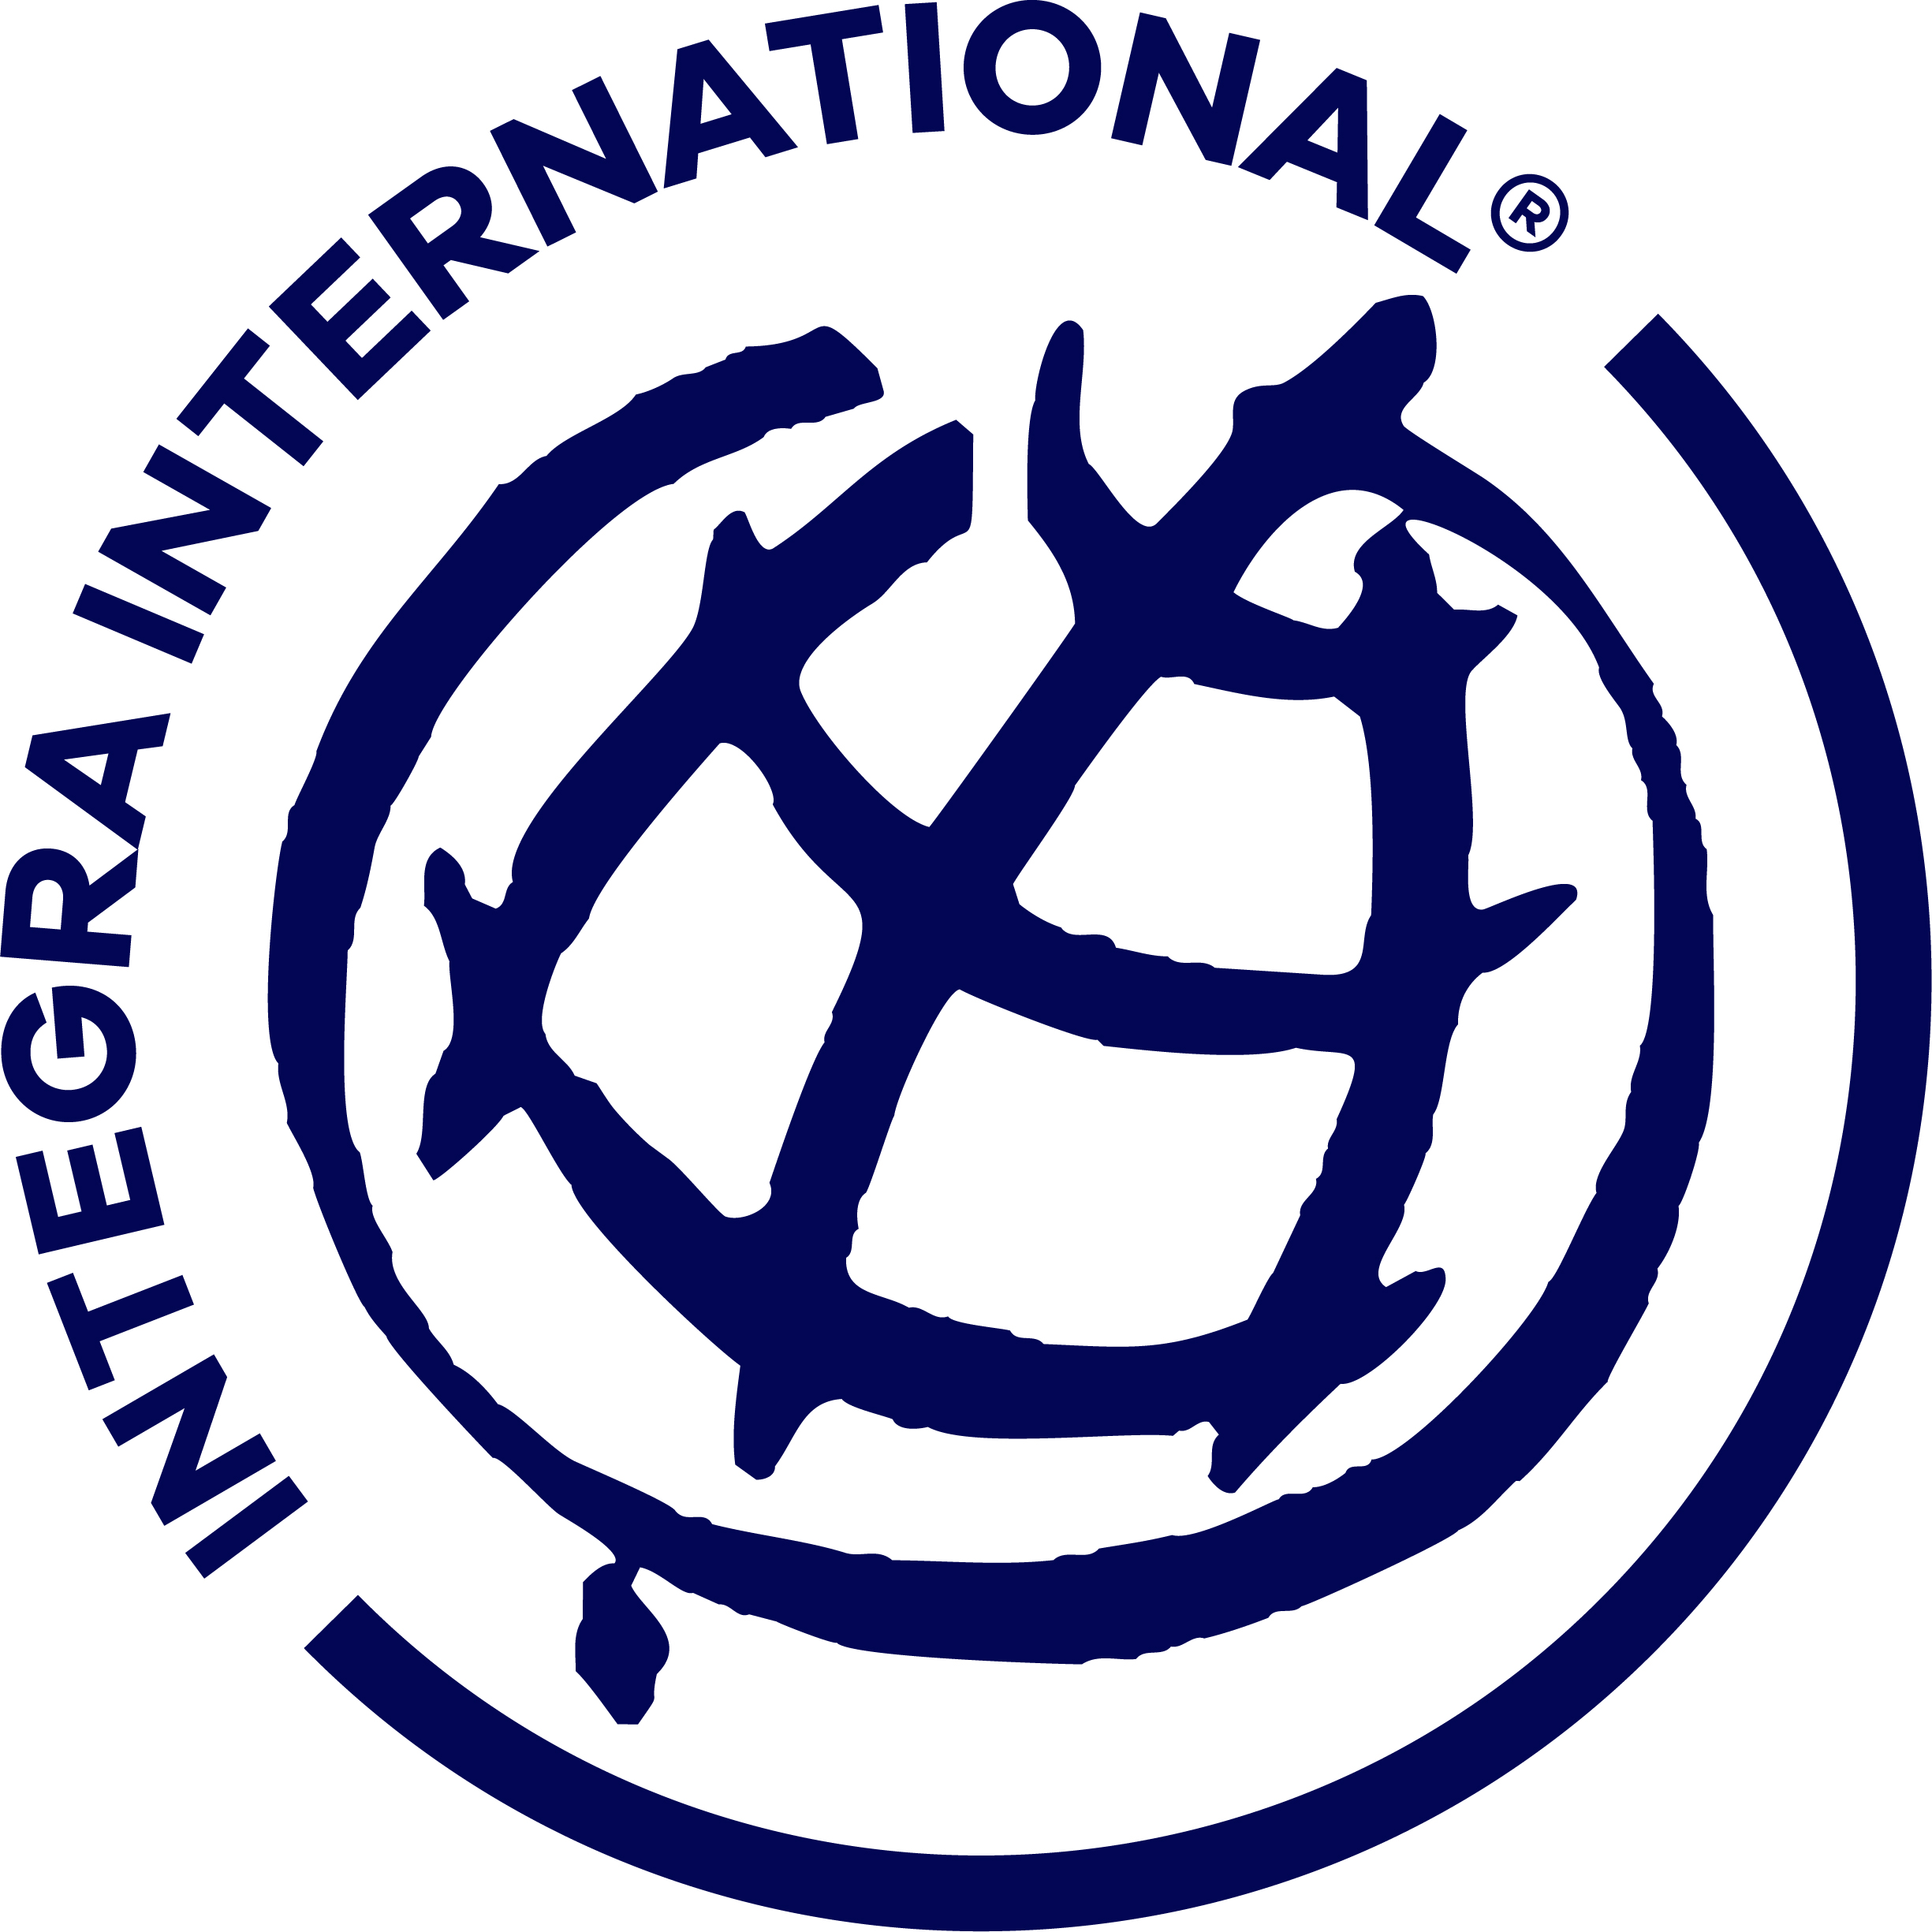 Integra International